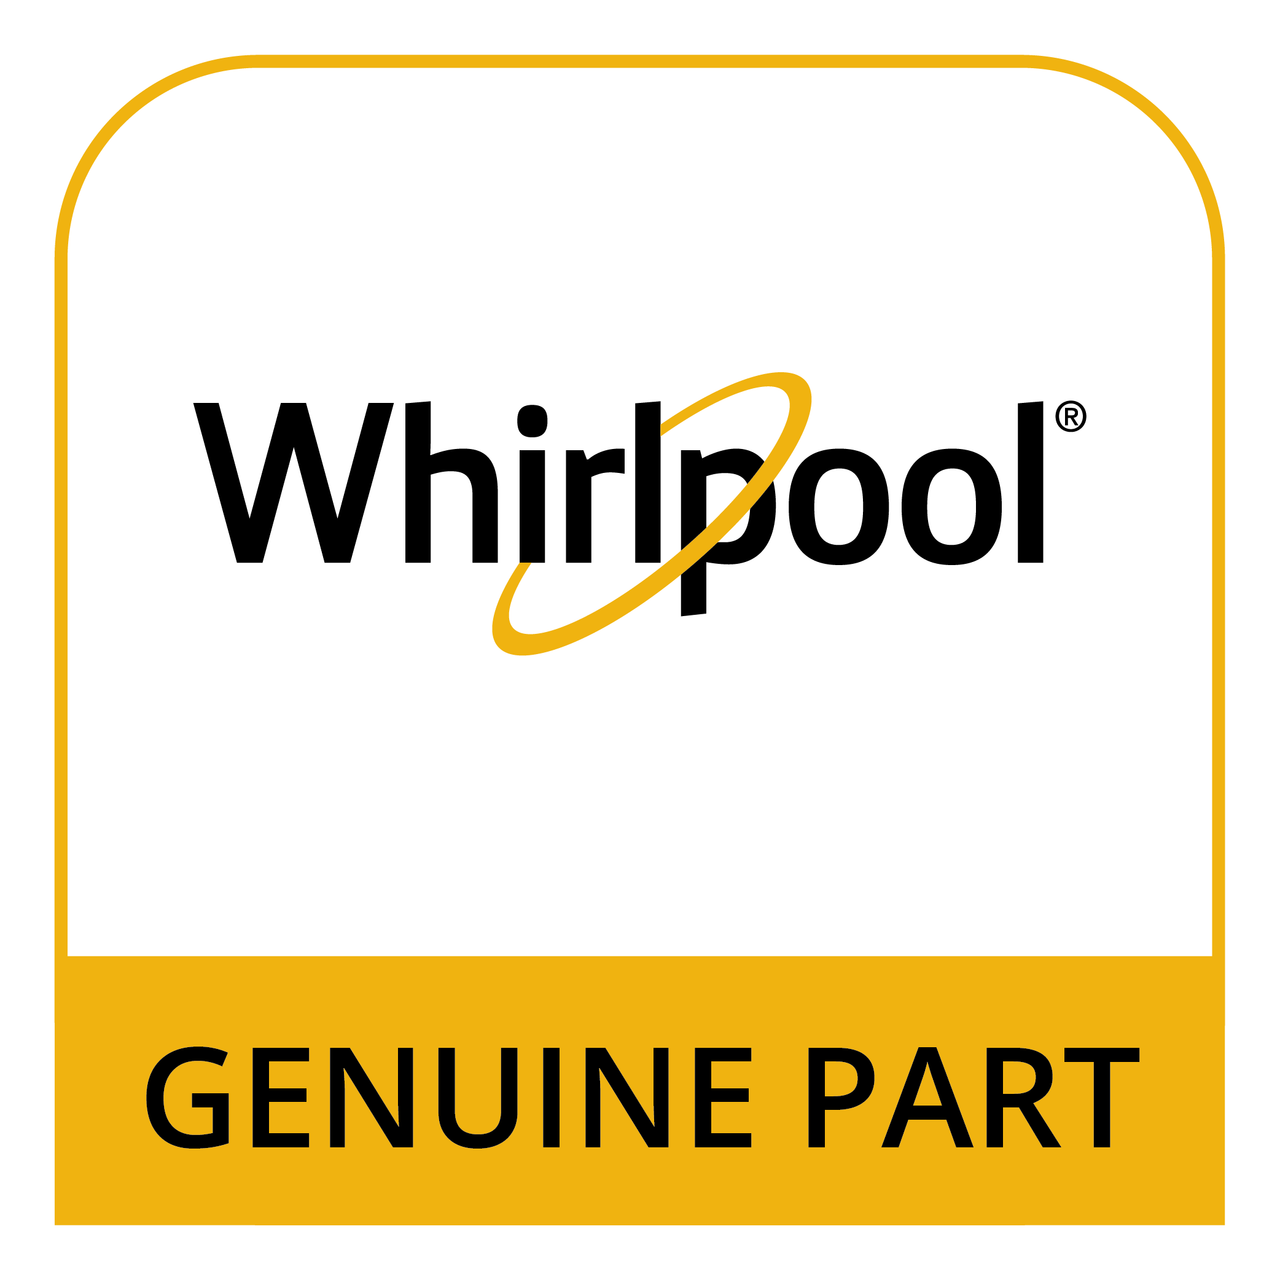 Whirlpool 0087057 - MAX BLOWER MOTOR  WB26X506 - Genuine Part